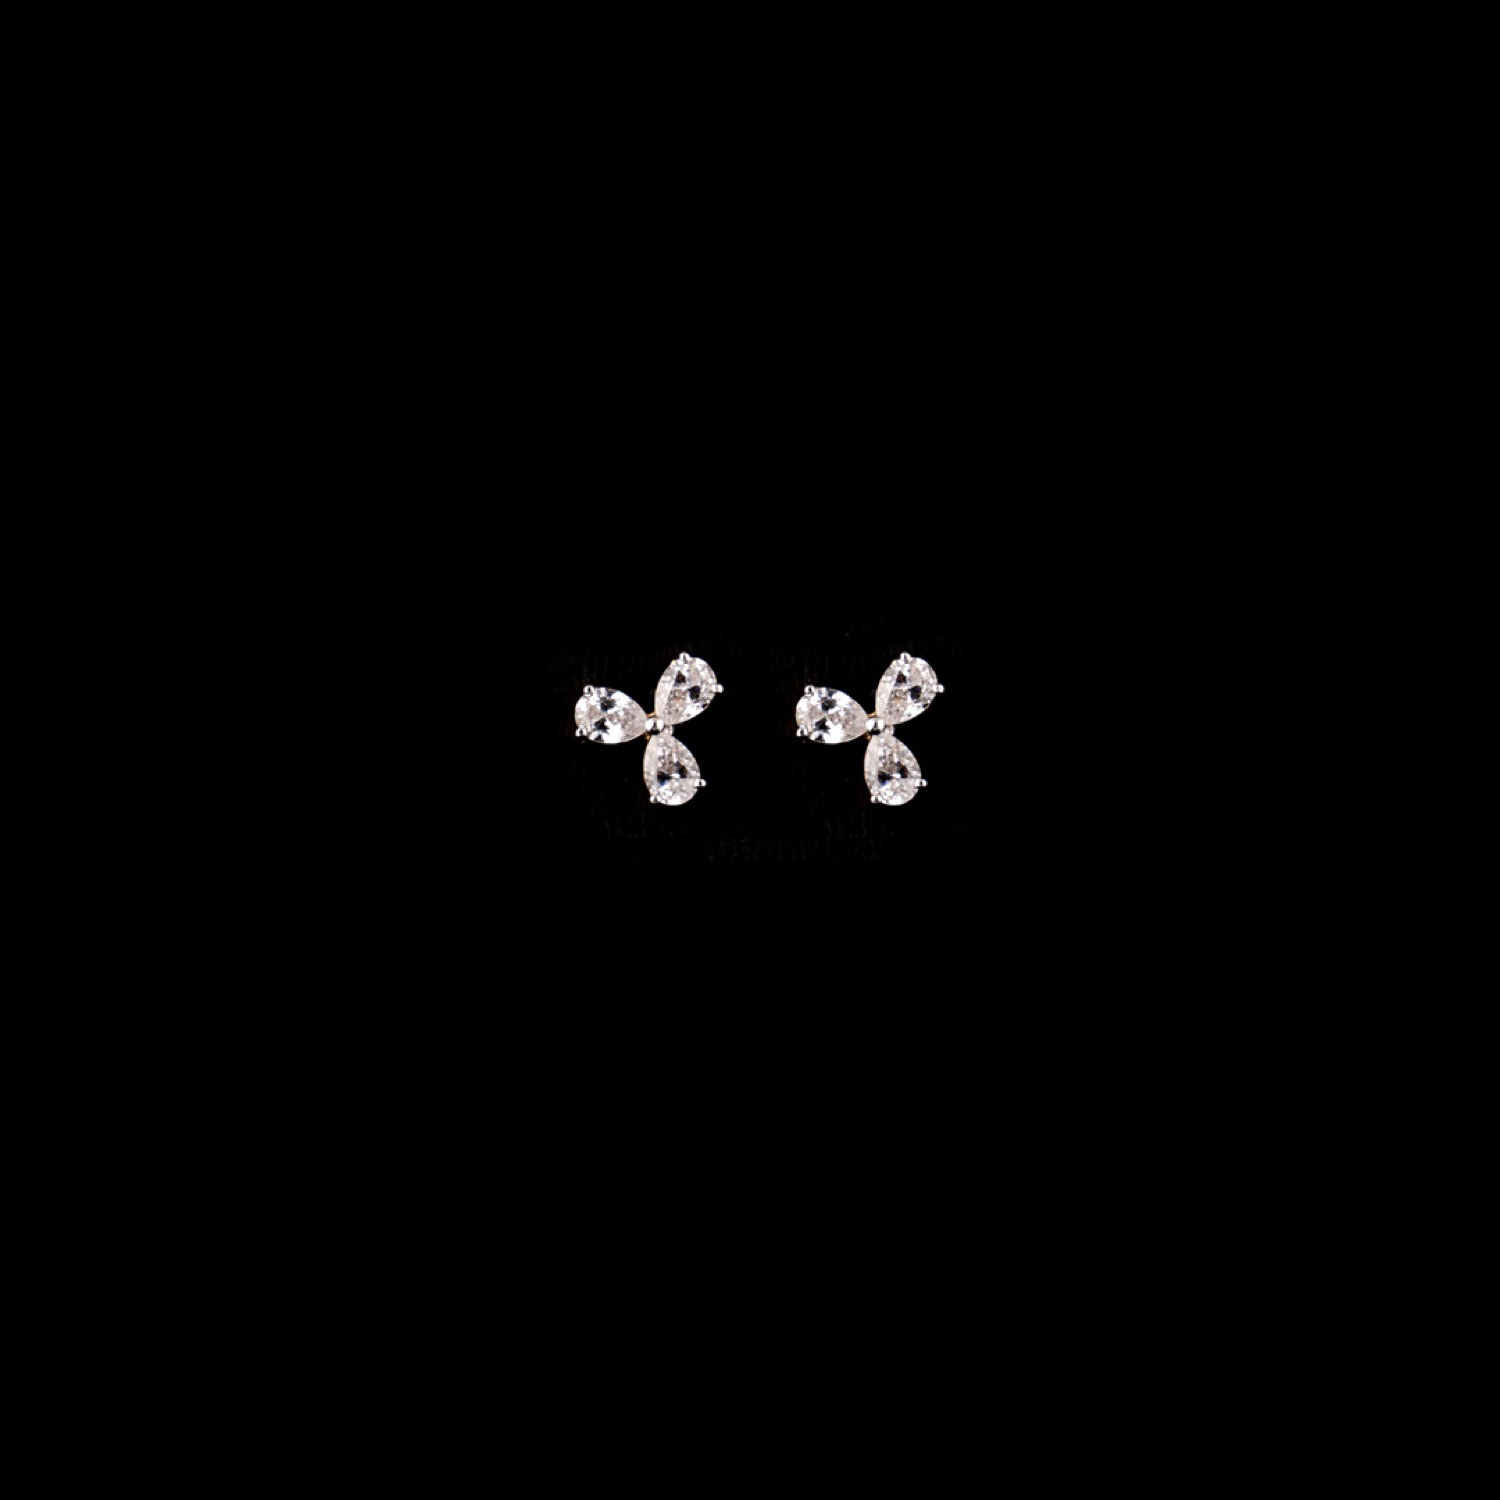 varam_earrings_102022_pear_cut_triple_stone_gold_coated_silver_earrings-1